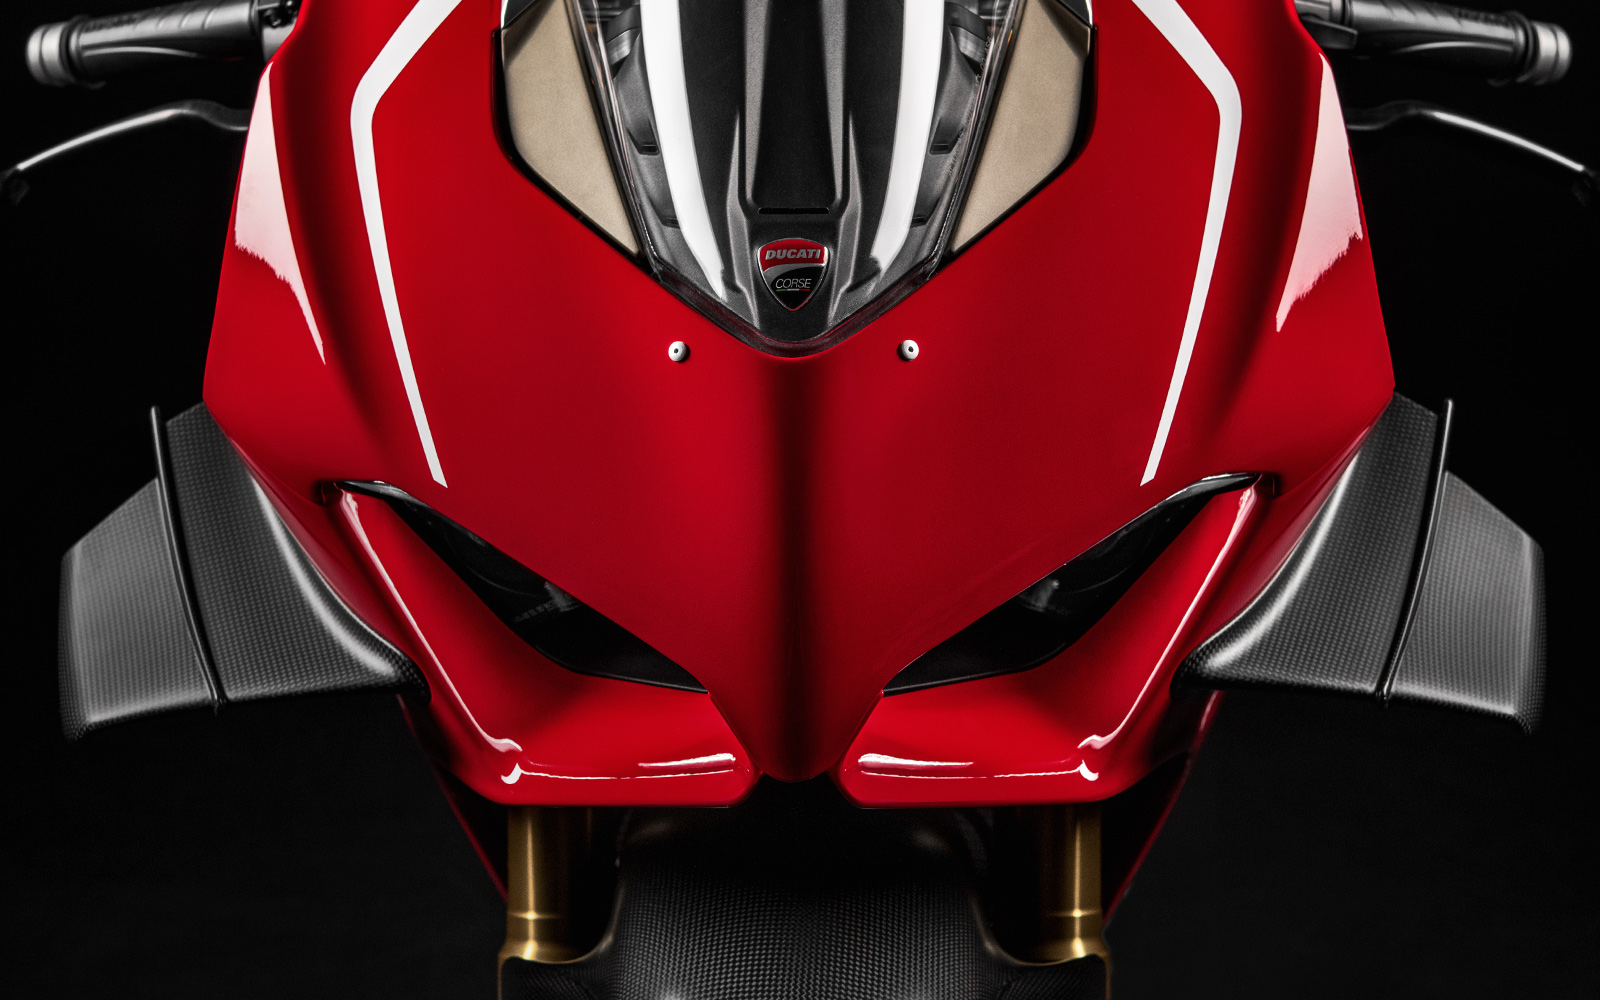 Ducati Innovation: the dream of riding a Ducati